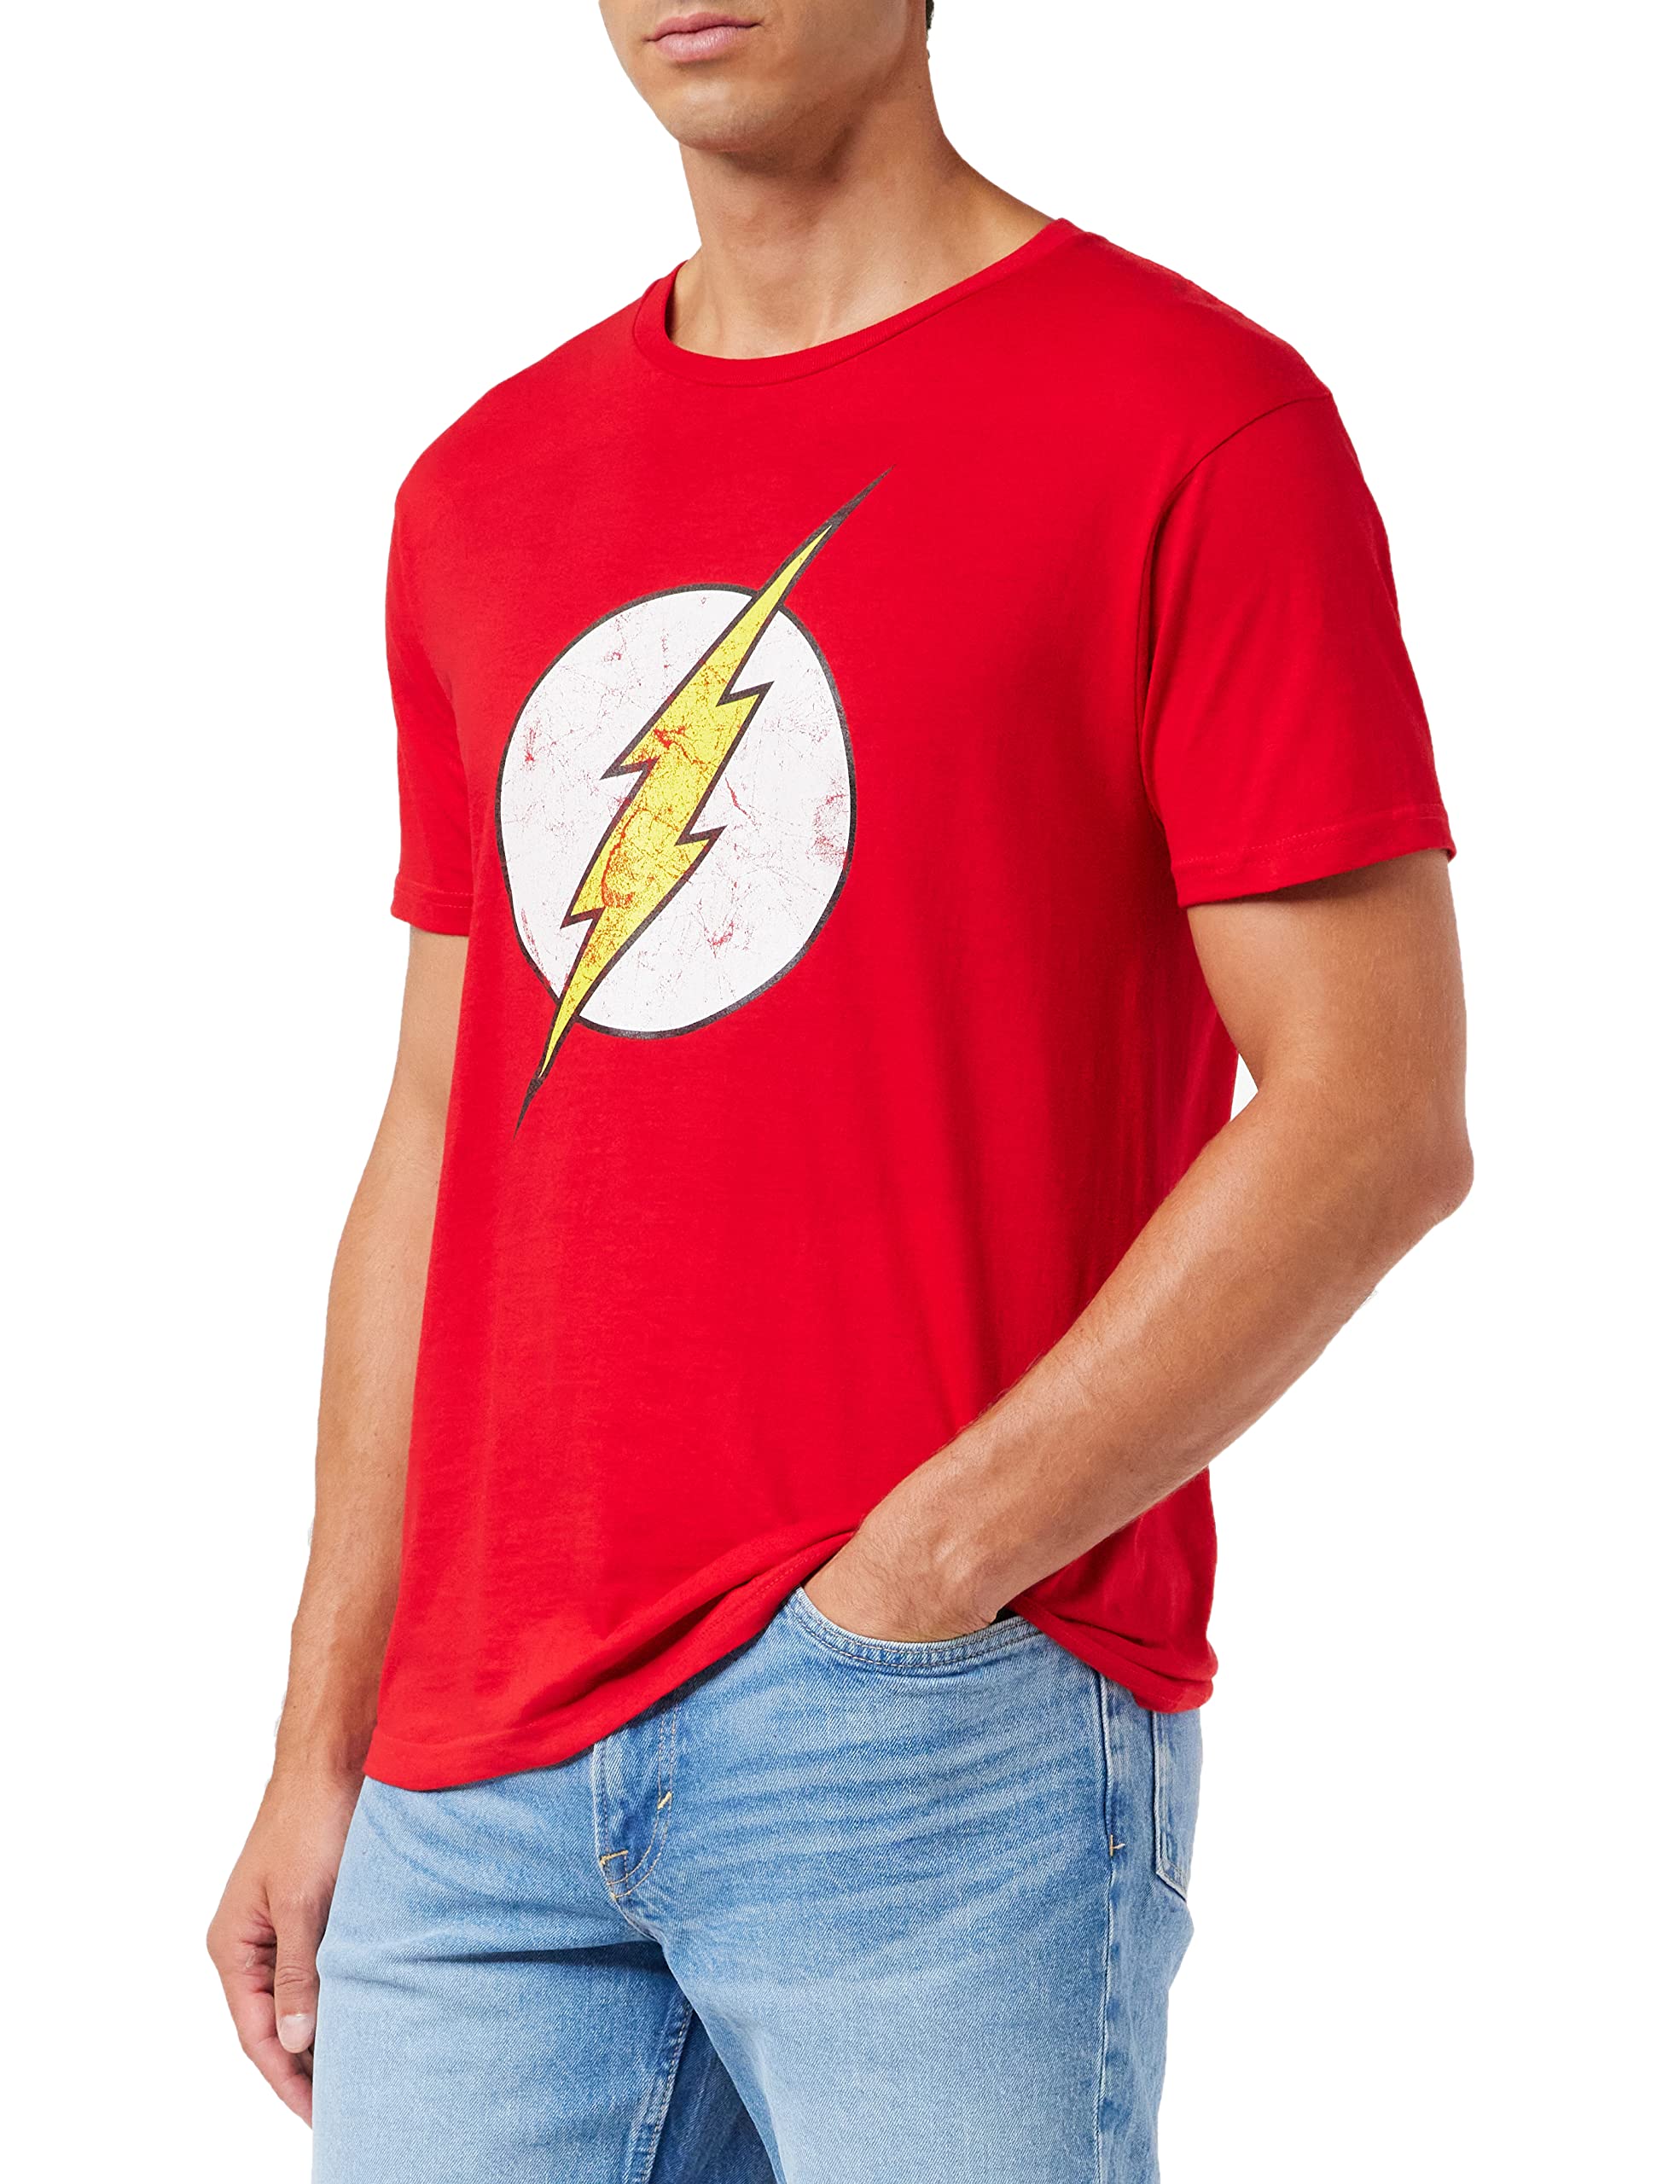 Flash Herren Logo T-Shirt, rot, S